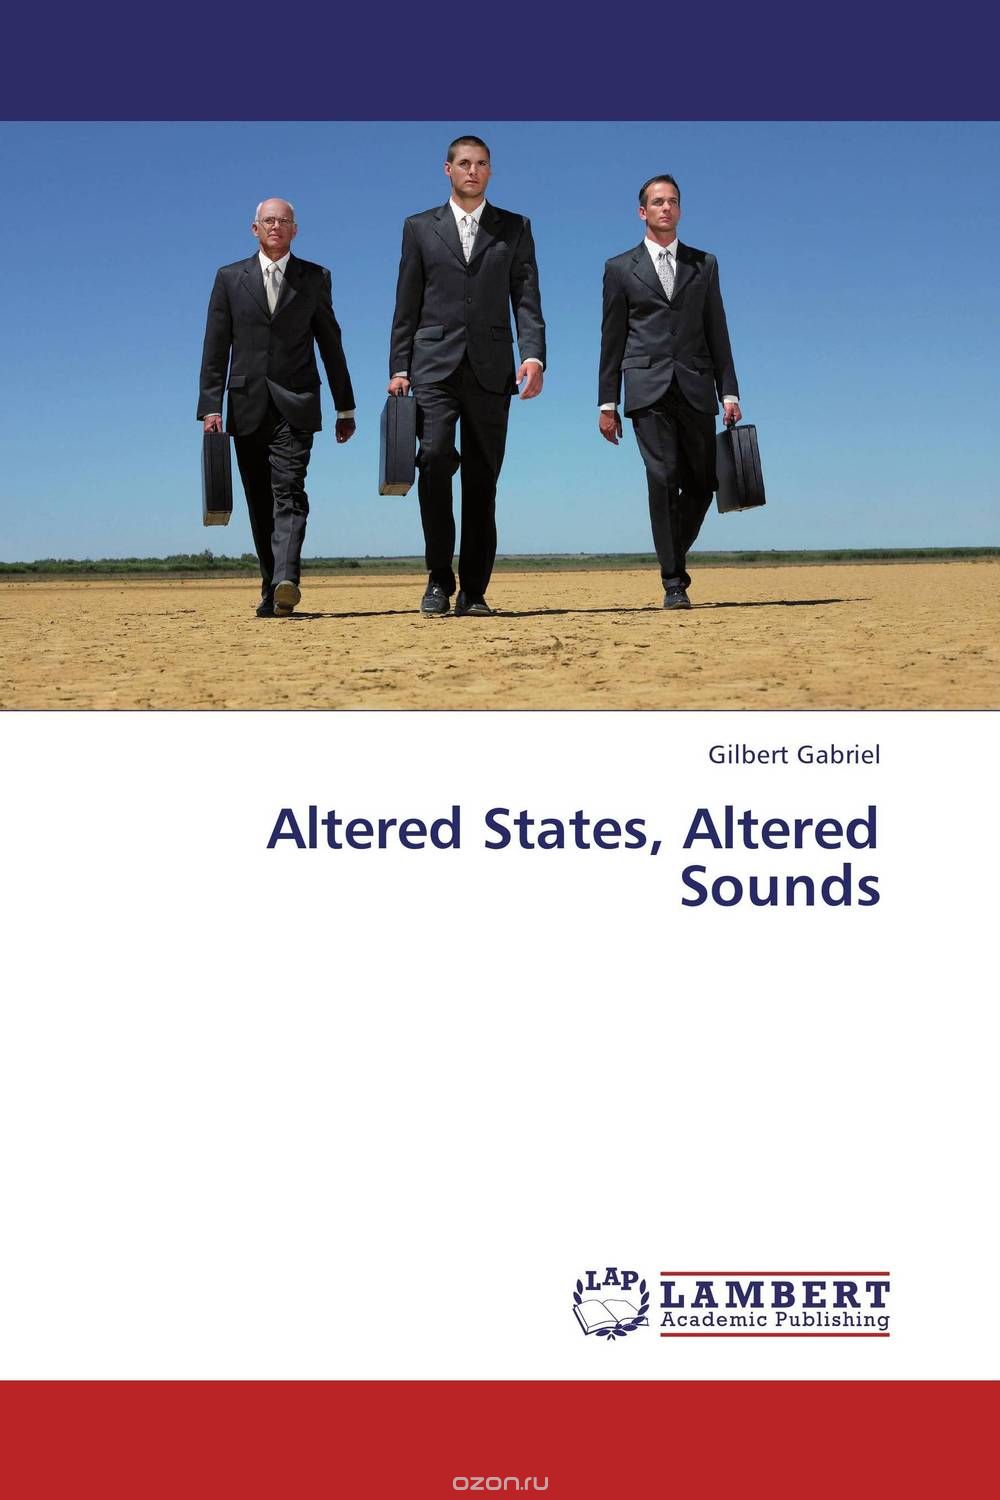 Скачать книгу "Altered States, Altered Sounds"